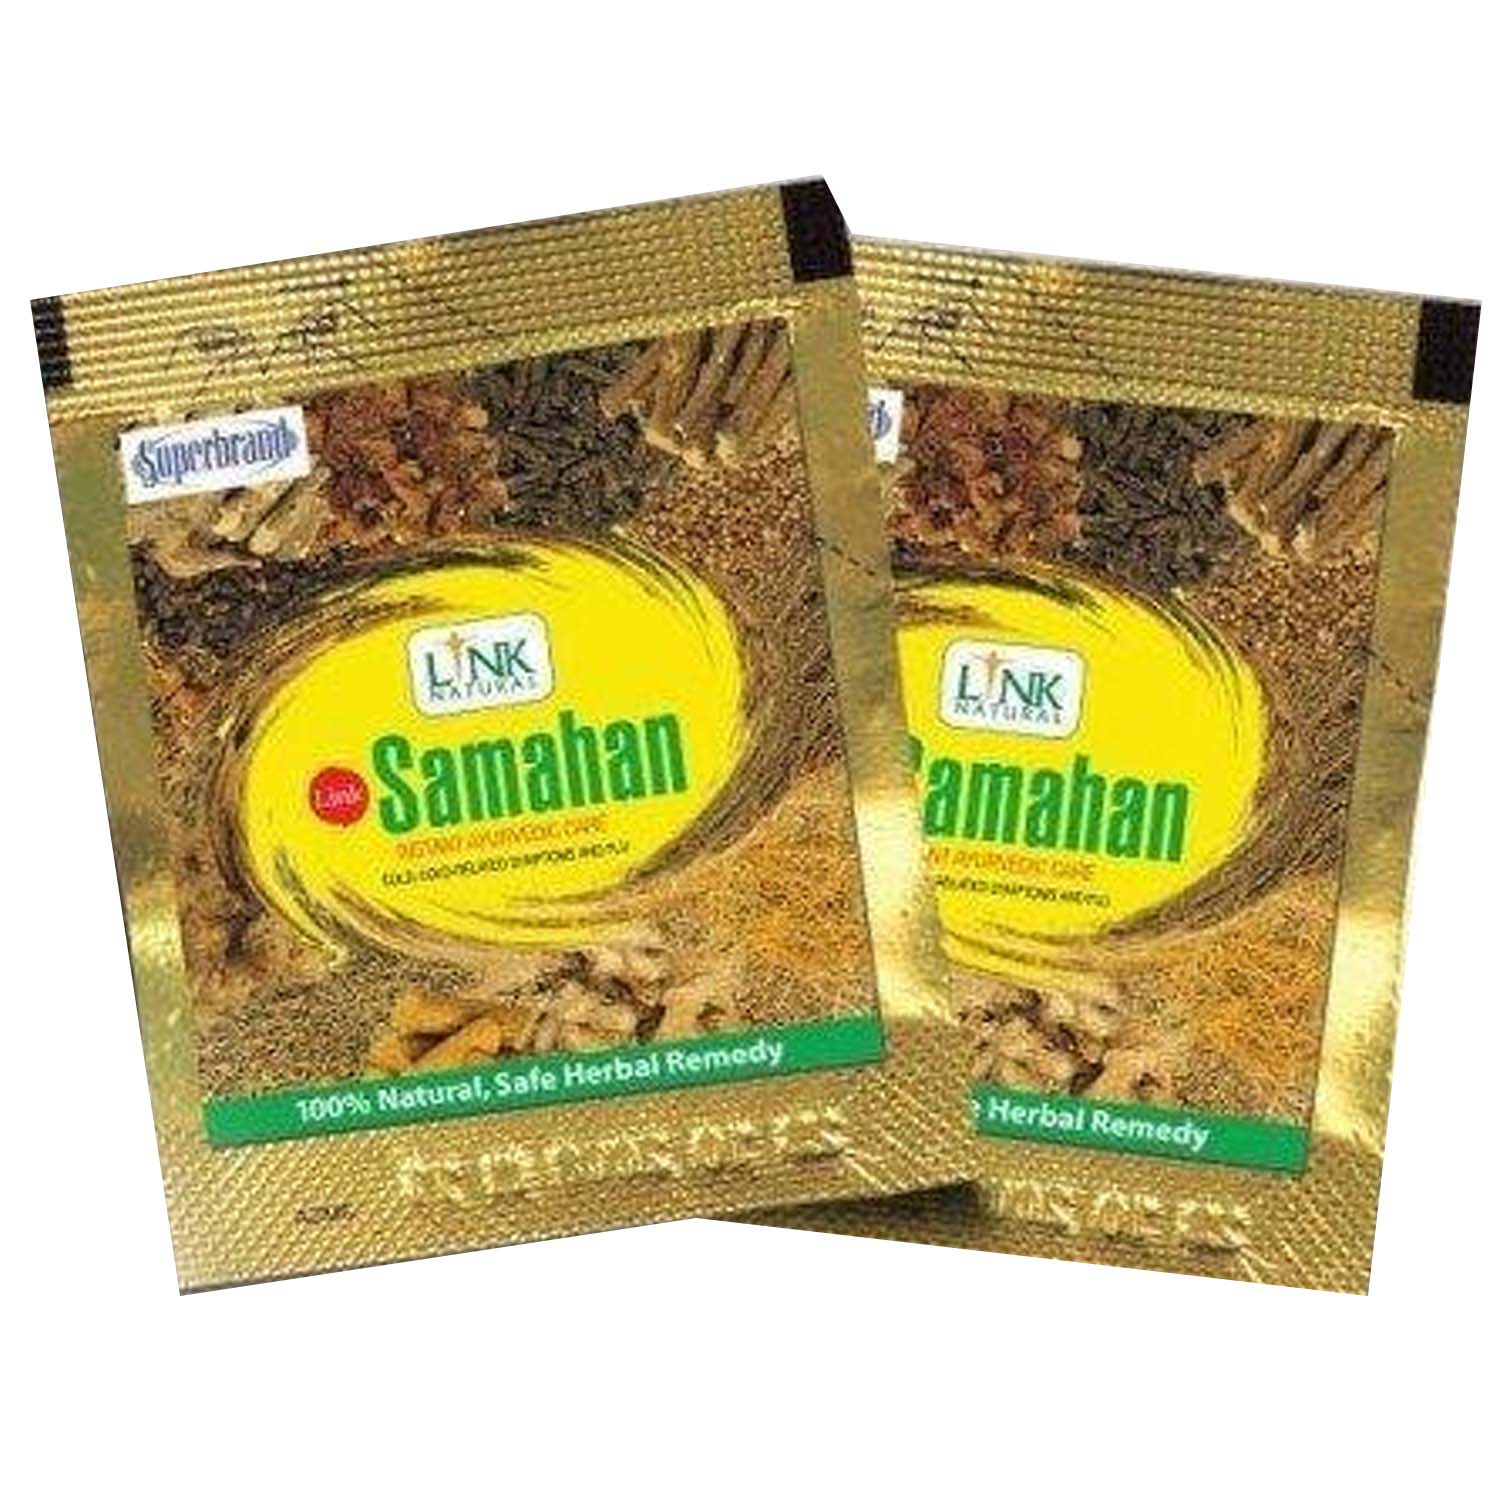 Link Naturals Samahan, 4 gm, Pack of 1 